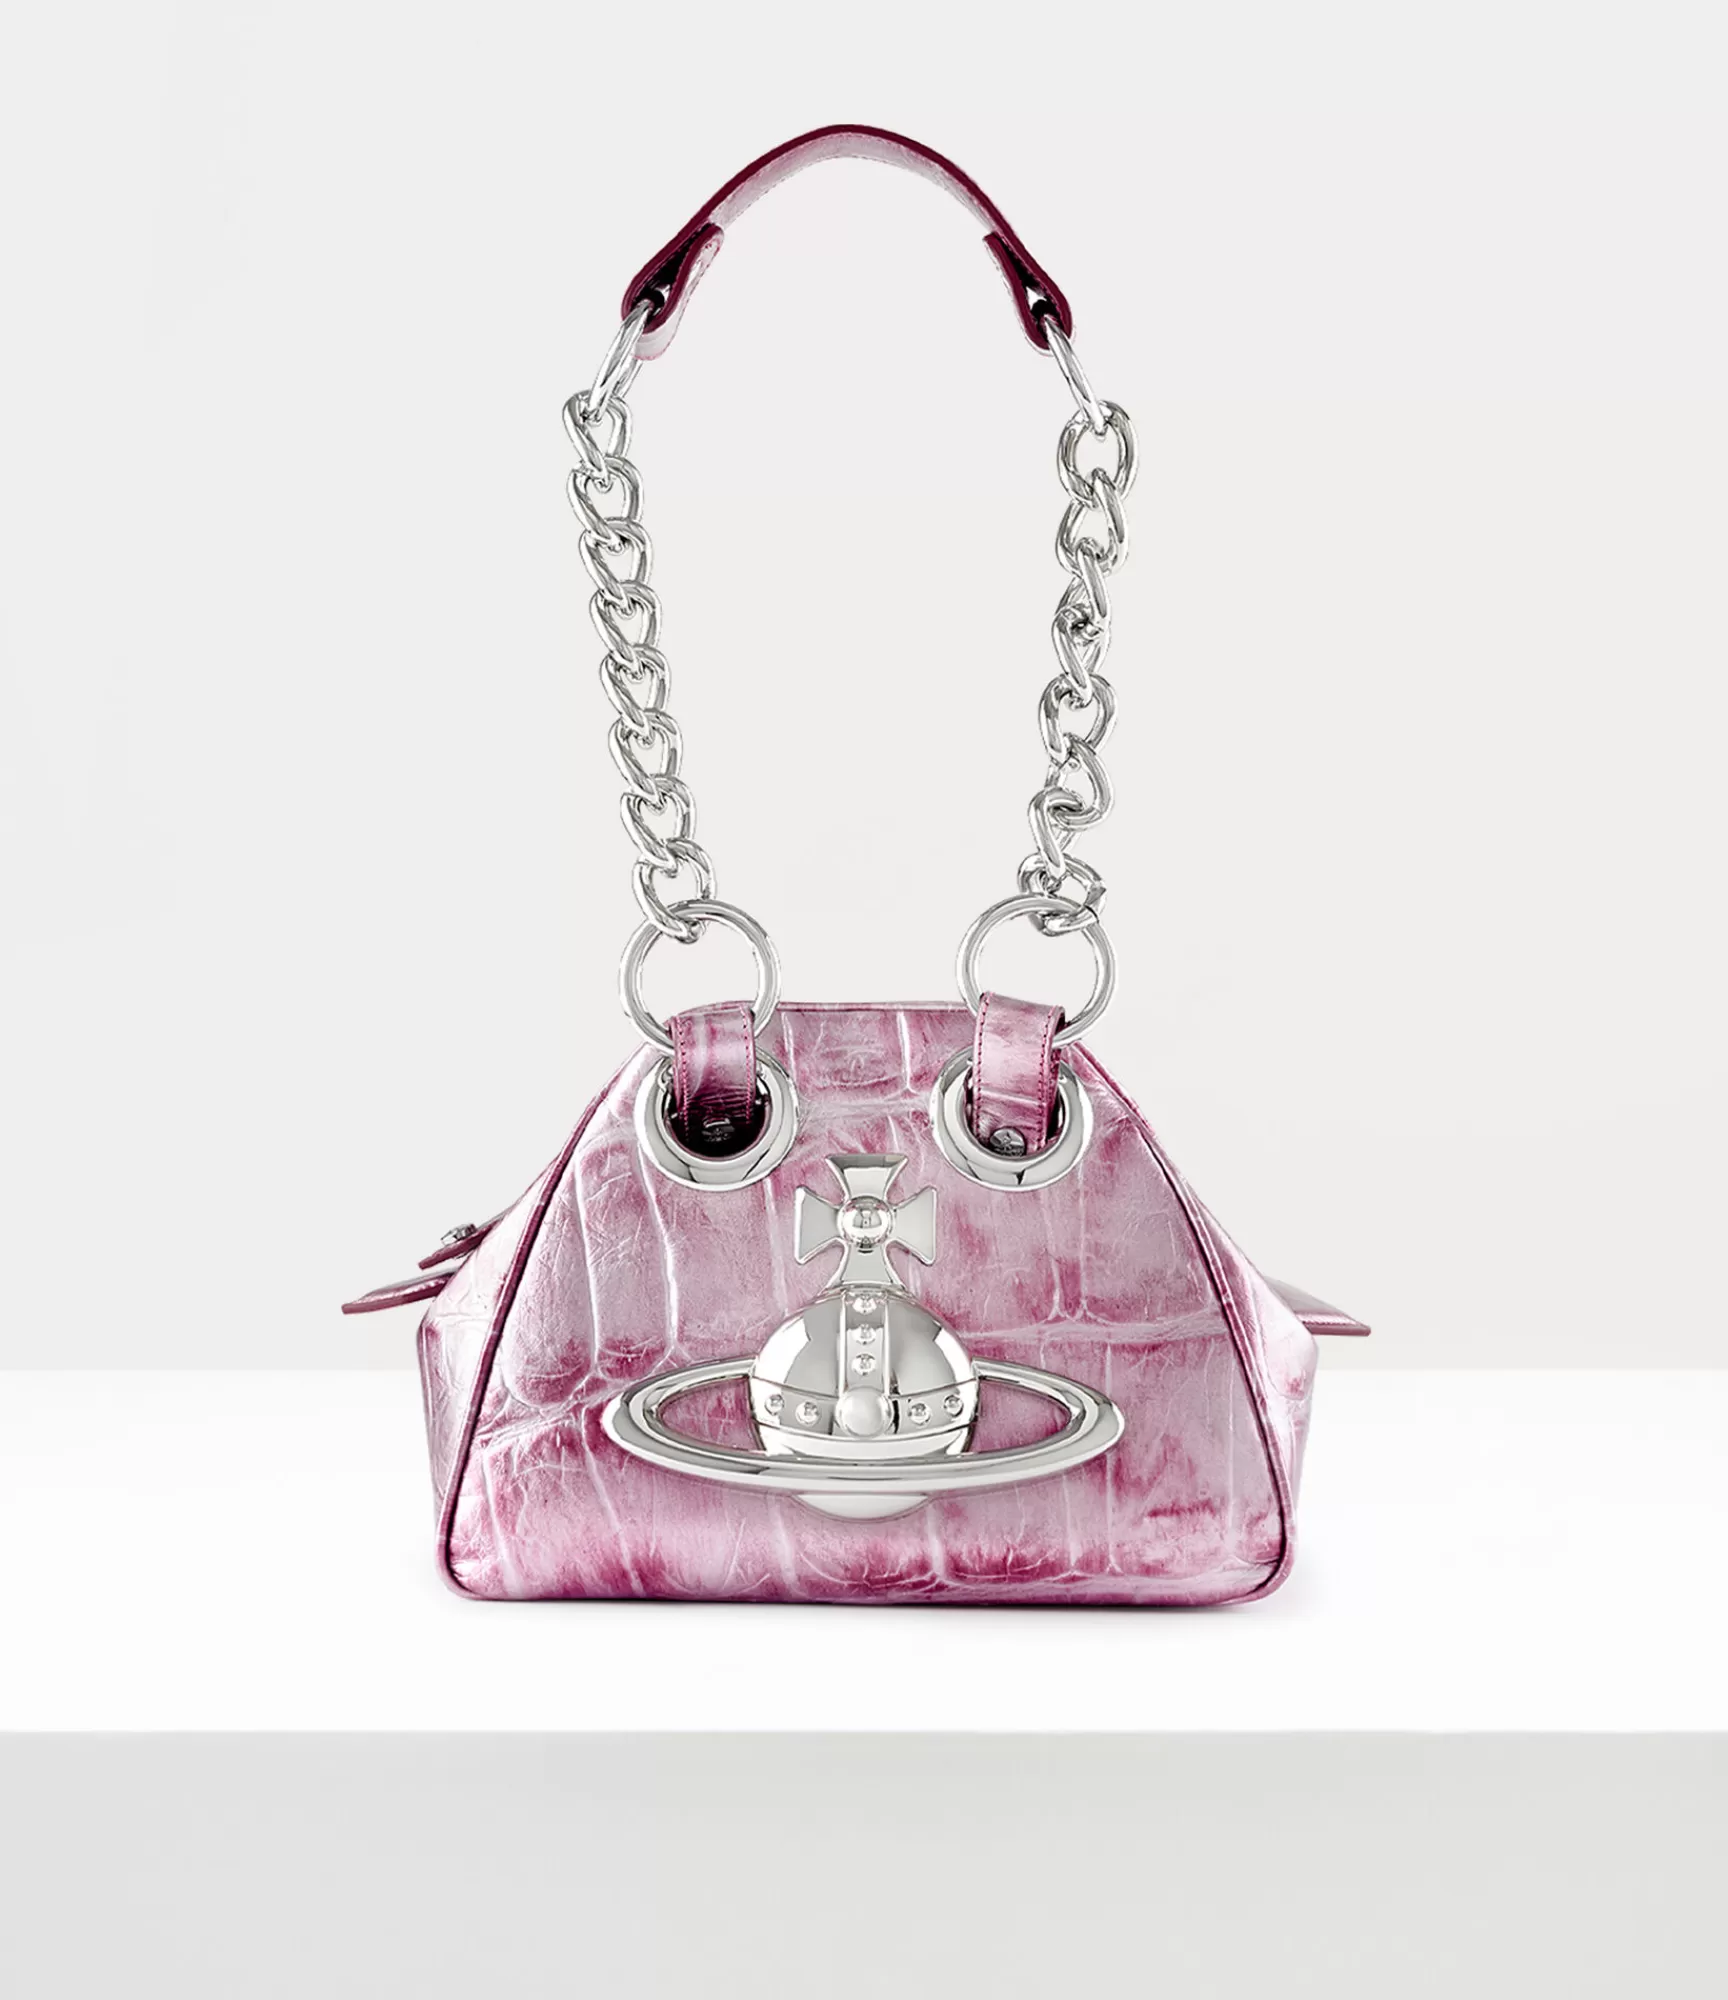 Vivienne Westwood Handbags*Archive orb chain handbag Pink